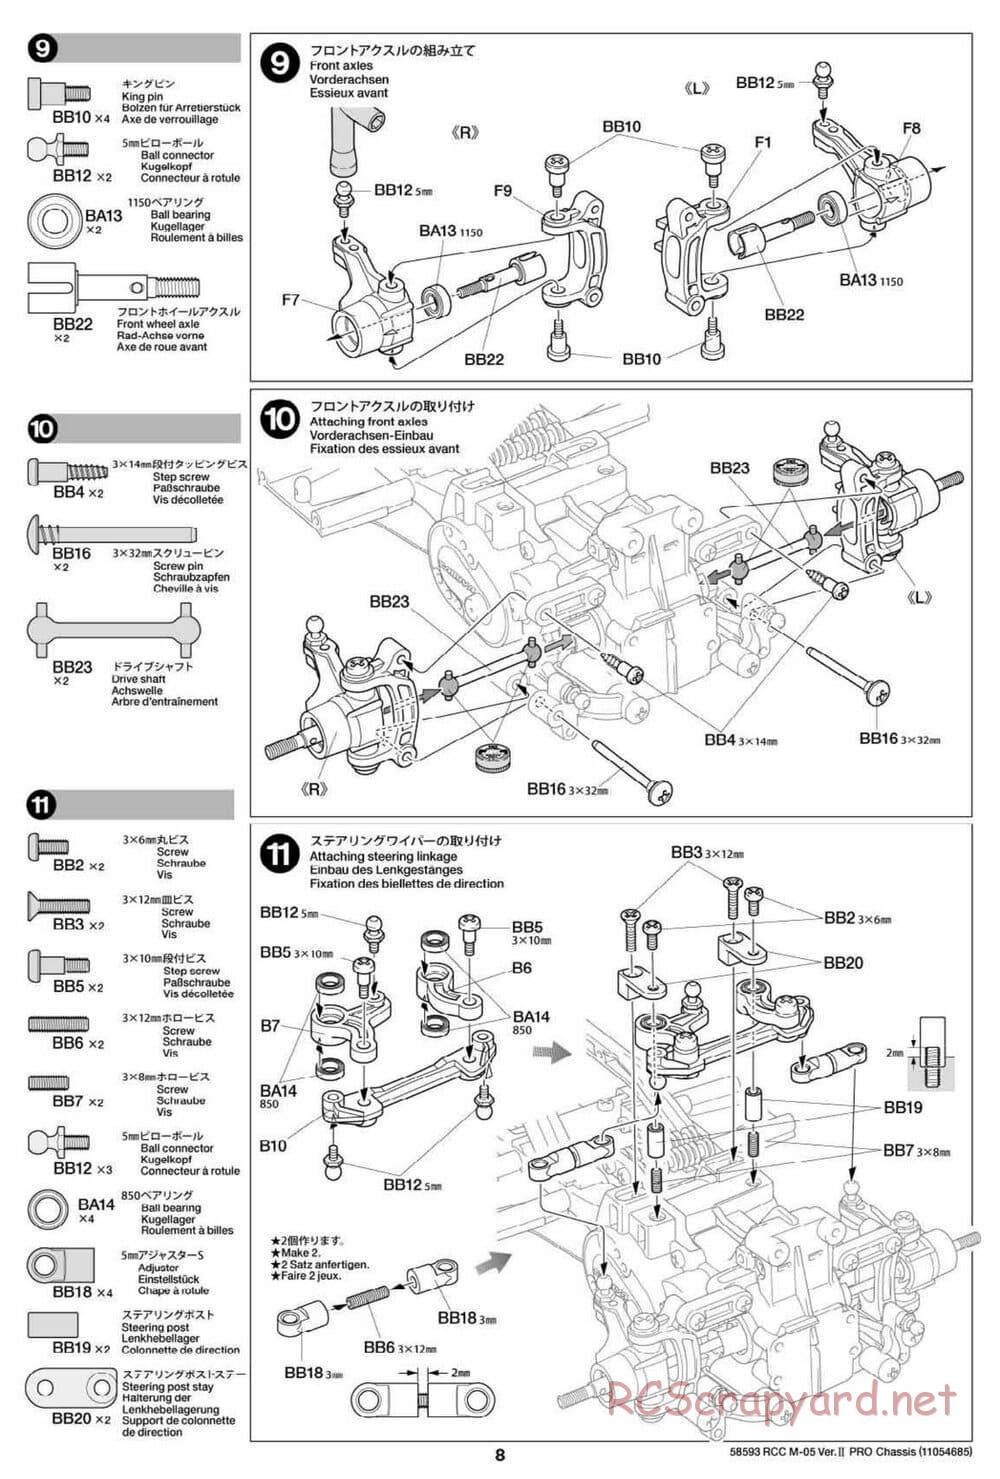 Tamiya - M-05 Ver.II Pro Chassis - Manual - Page 8